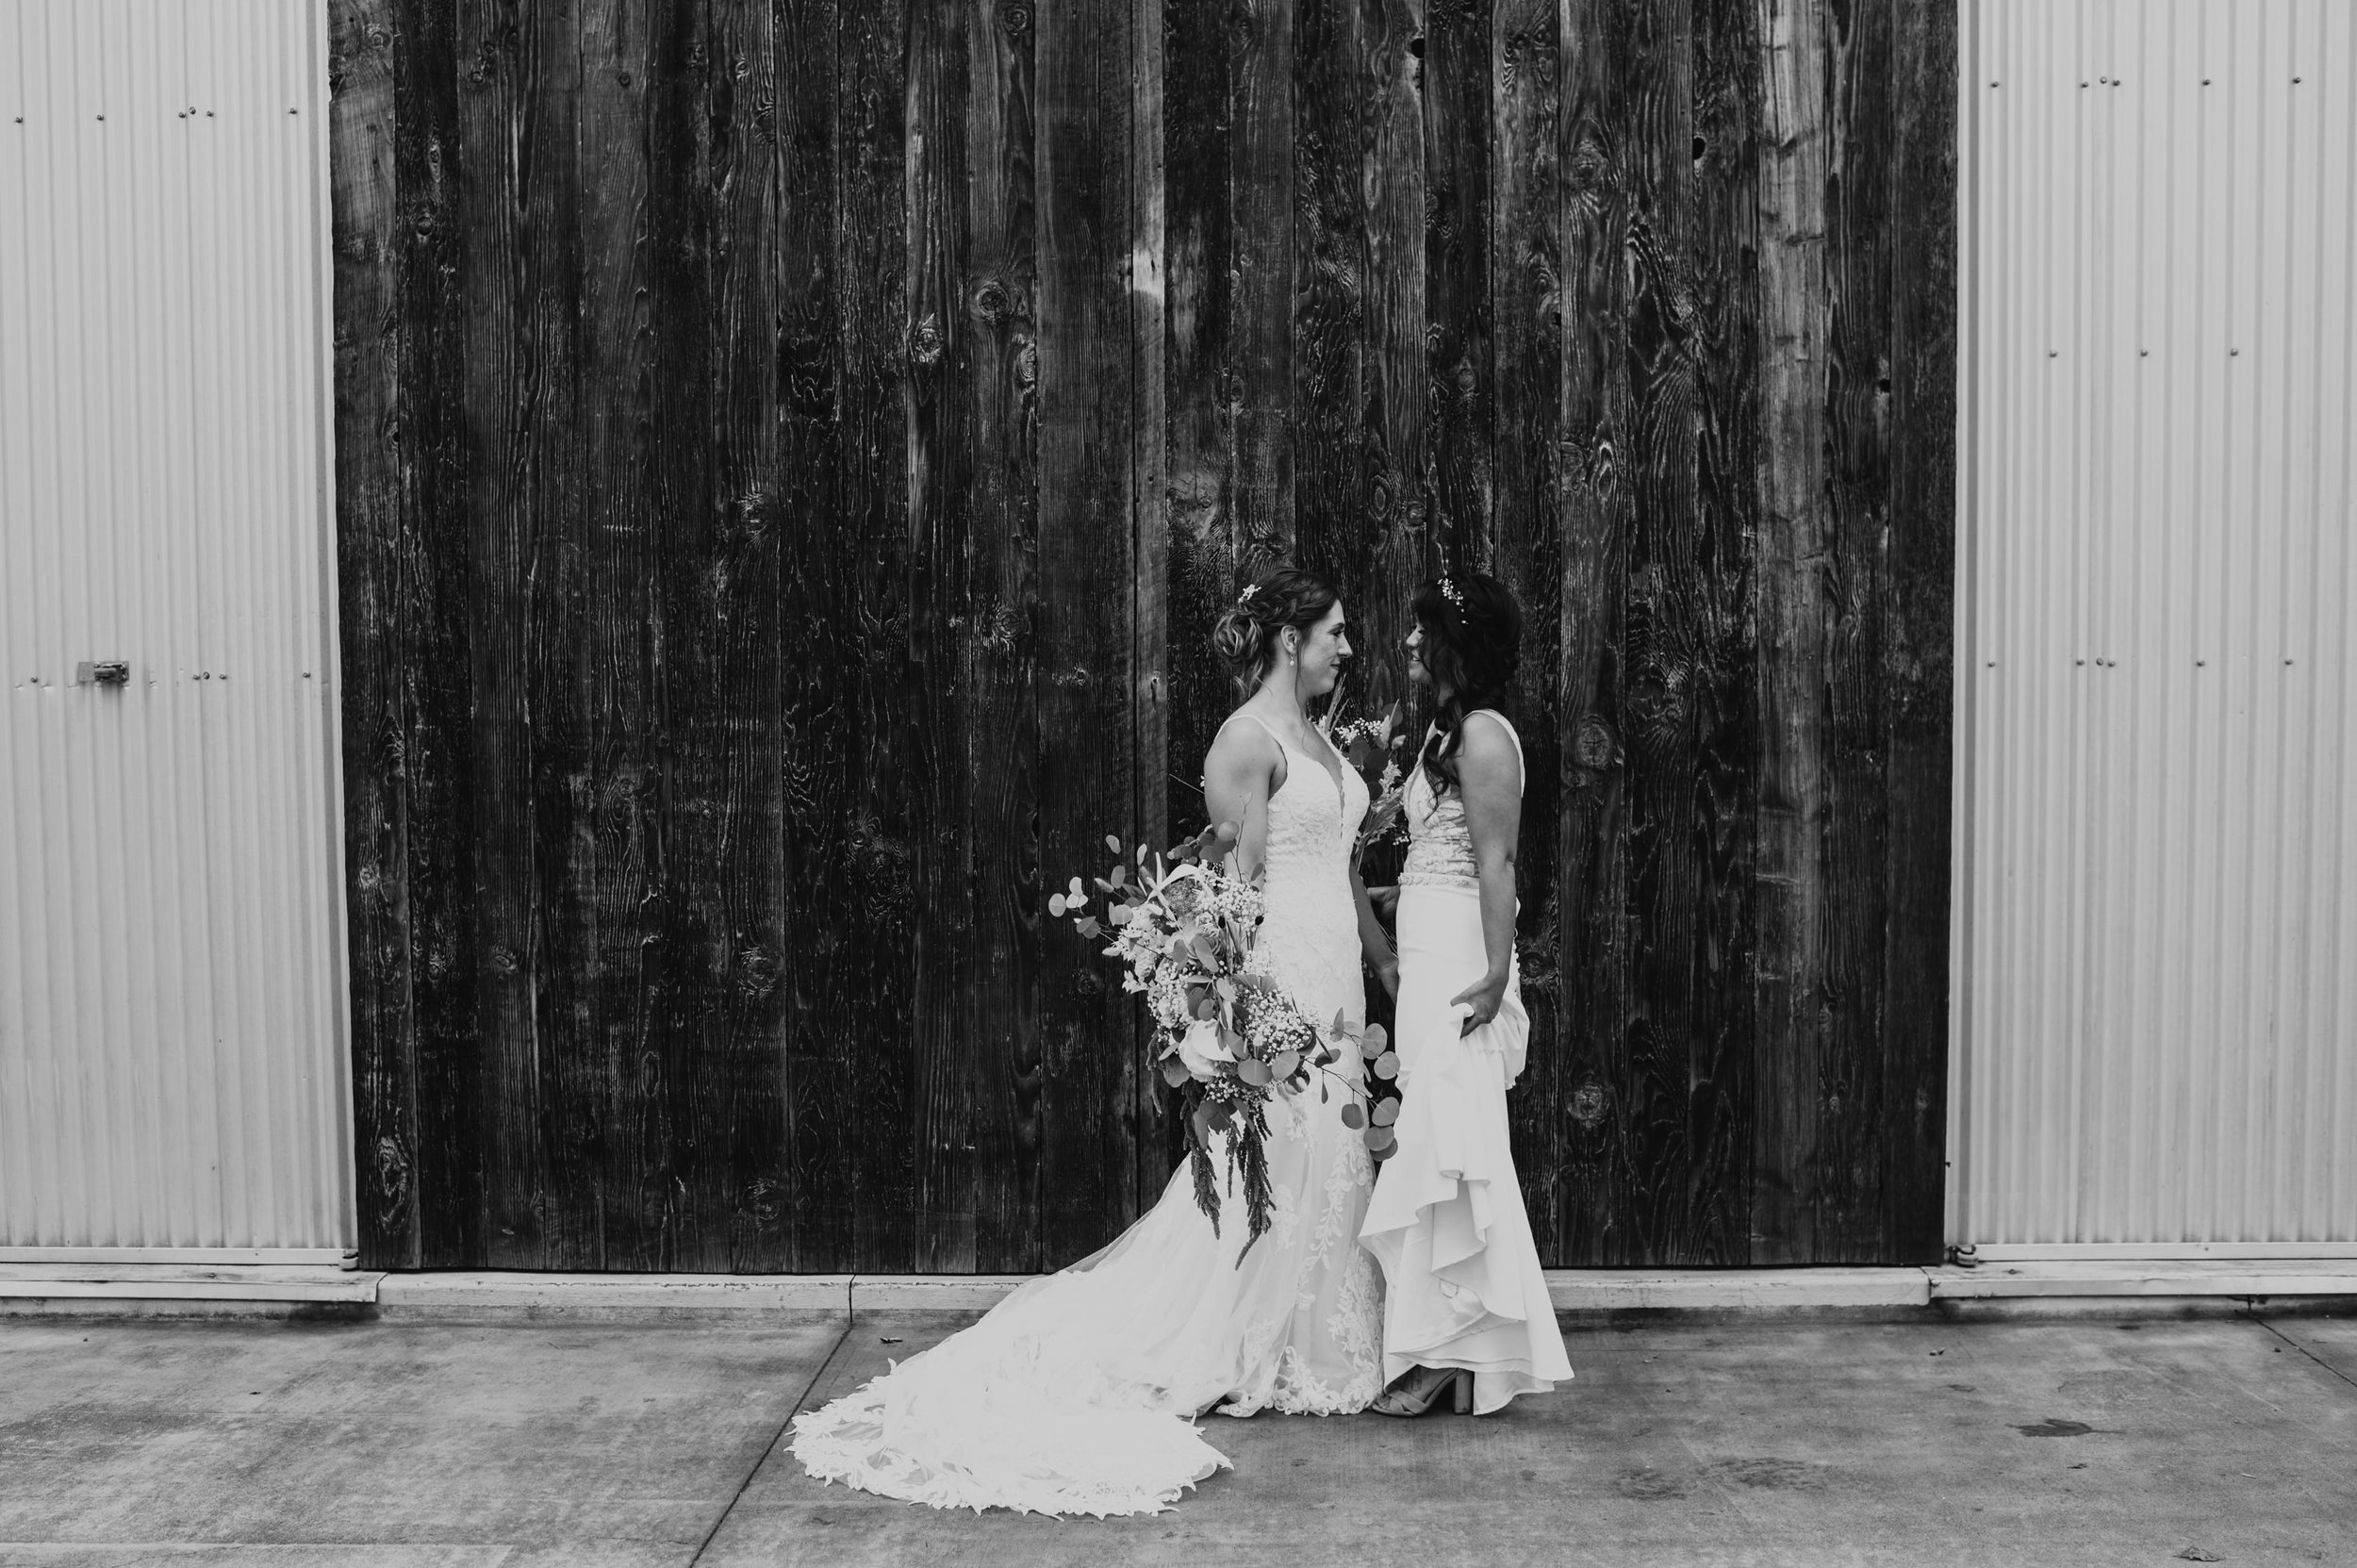 Sonoma County LGBTQ Wedding - Amber Garrett Photography - 034.JPG